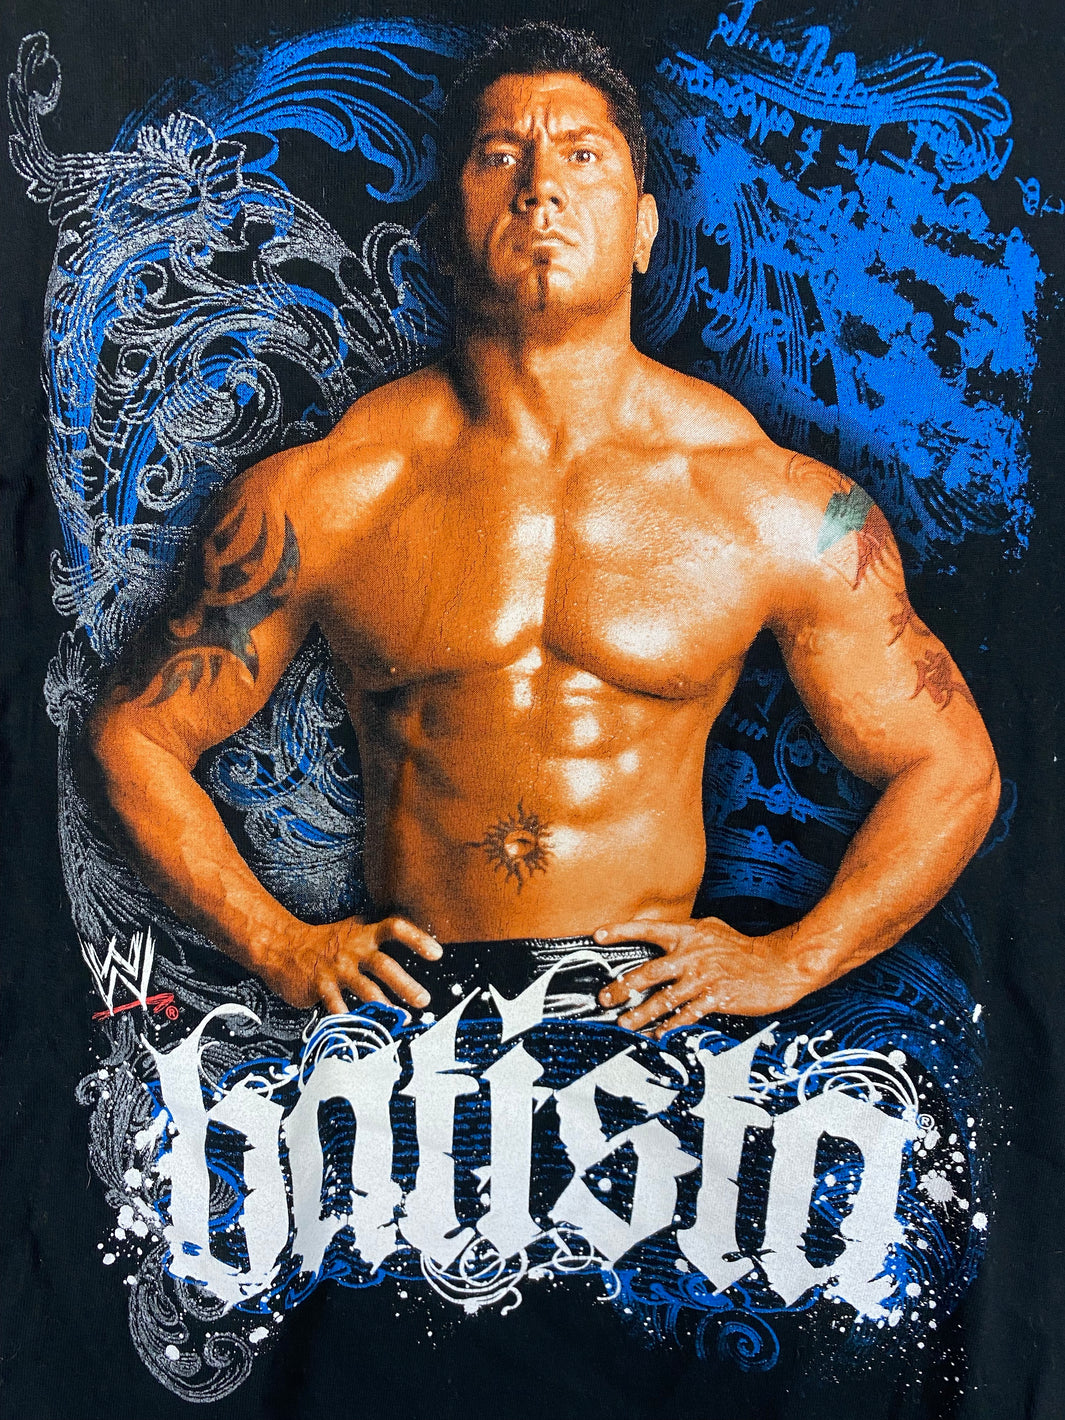 WWE Batista T-Shirt